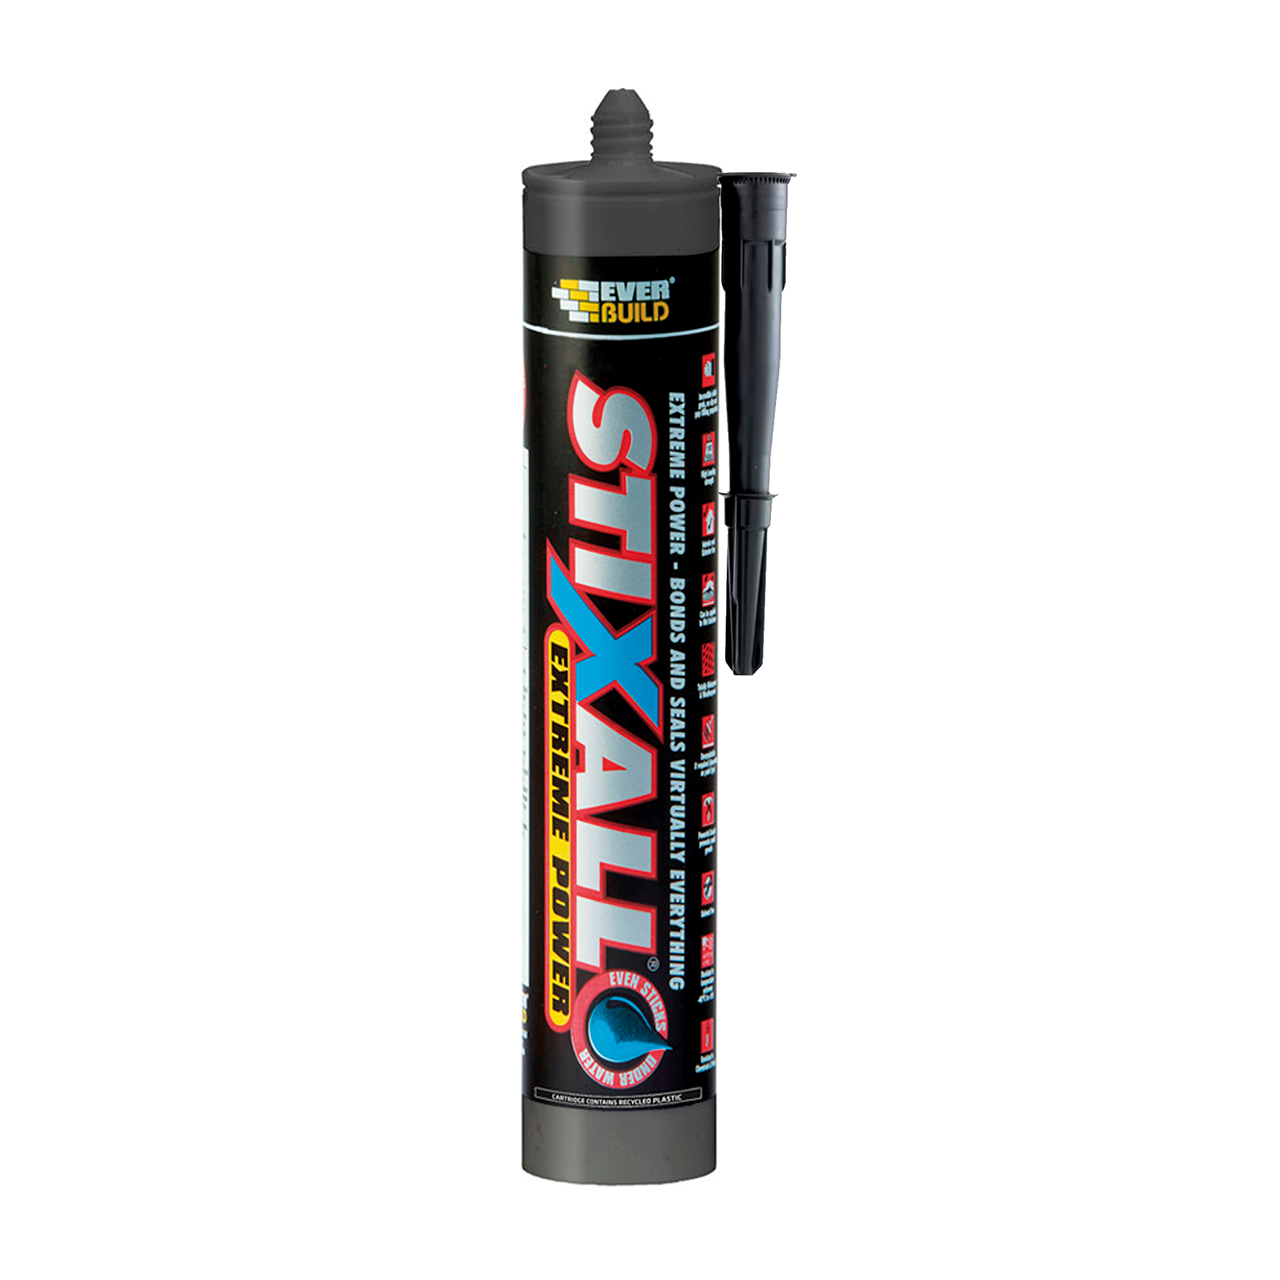 Stixall® Adhesive and Caulking Gun